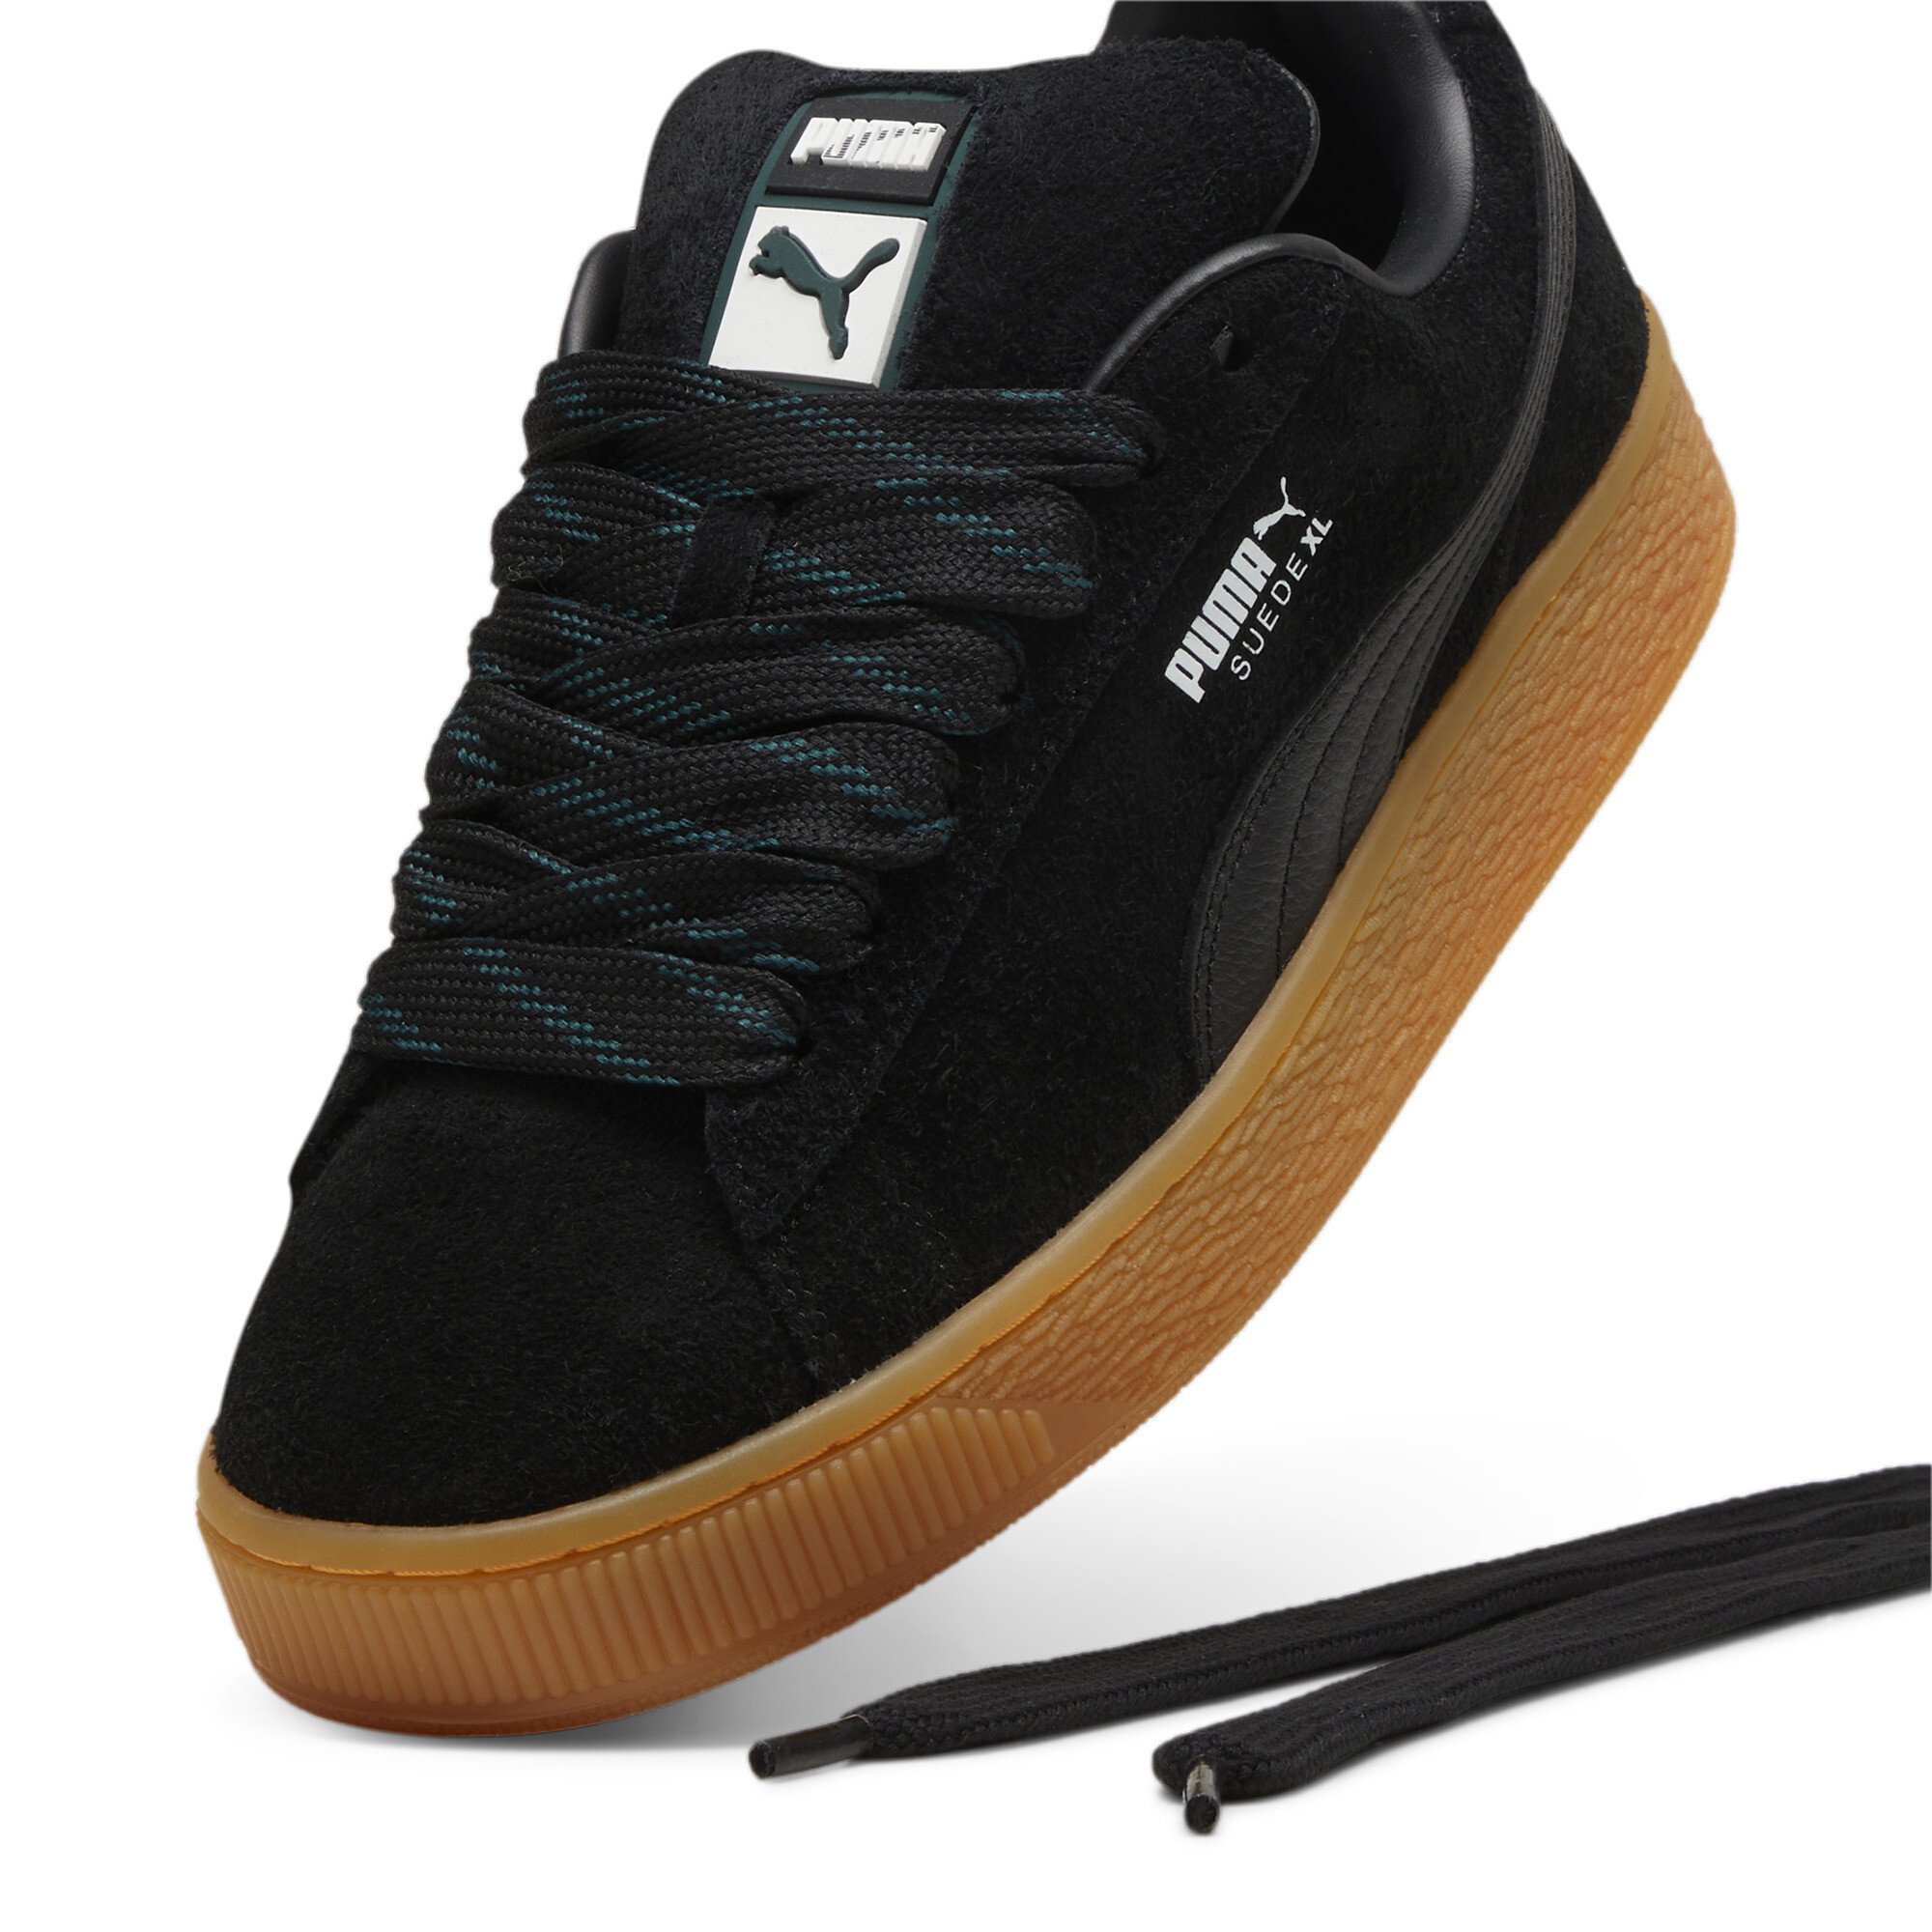 Puma Suede XL Flecked Unisex, Black, Size 48, Shoes